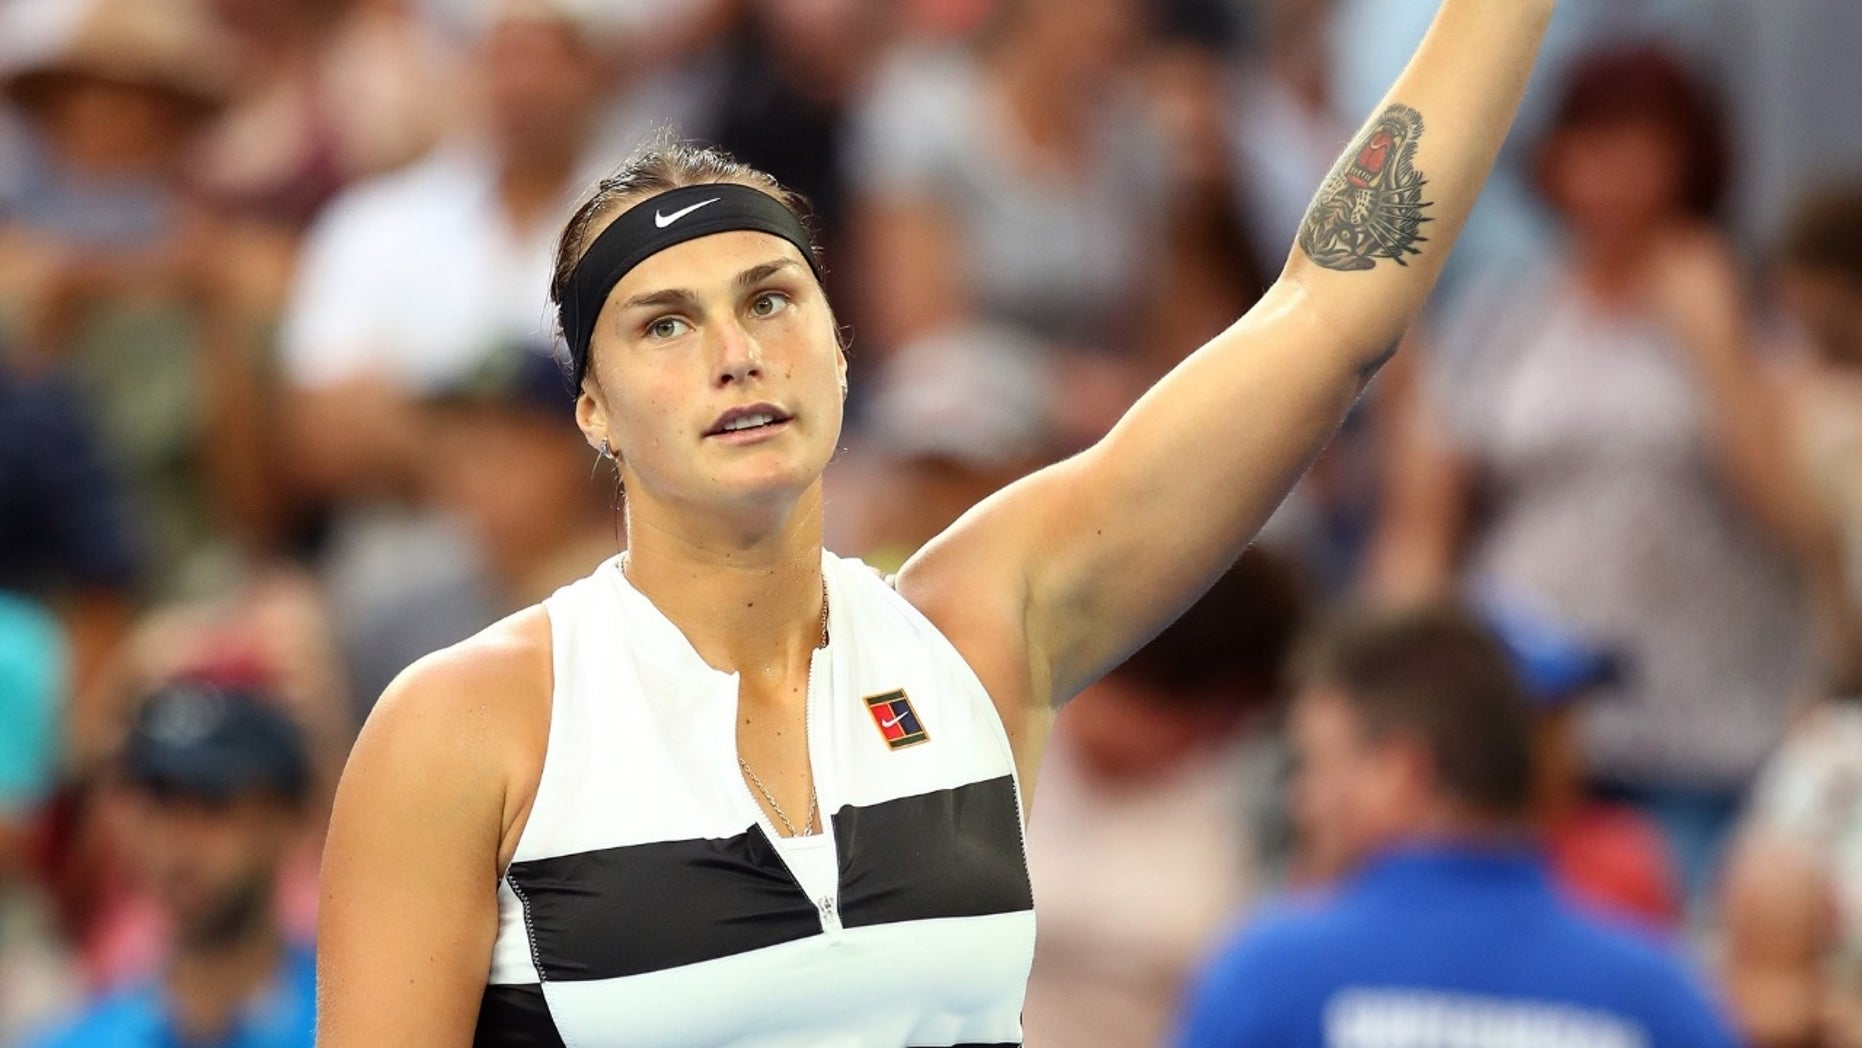 Two fans fight over tennis star Aryna Sabalenka’s sweaty headband following match ...